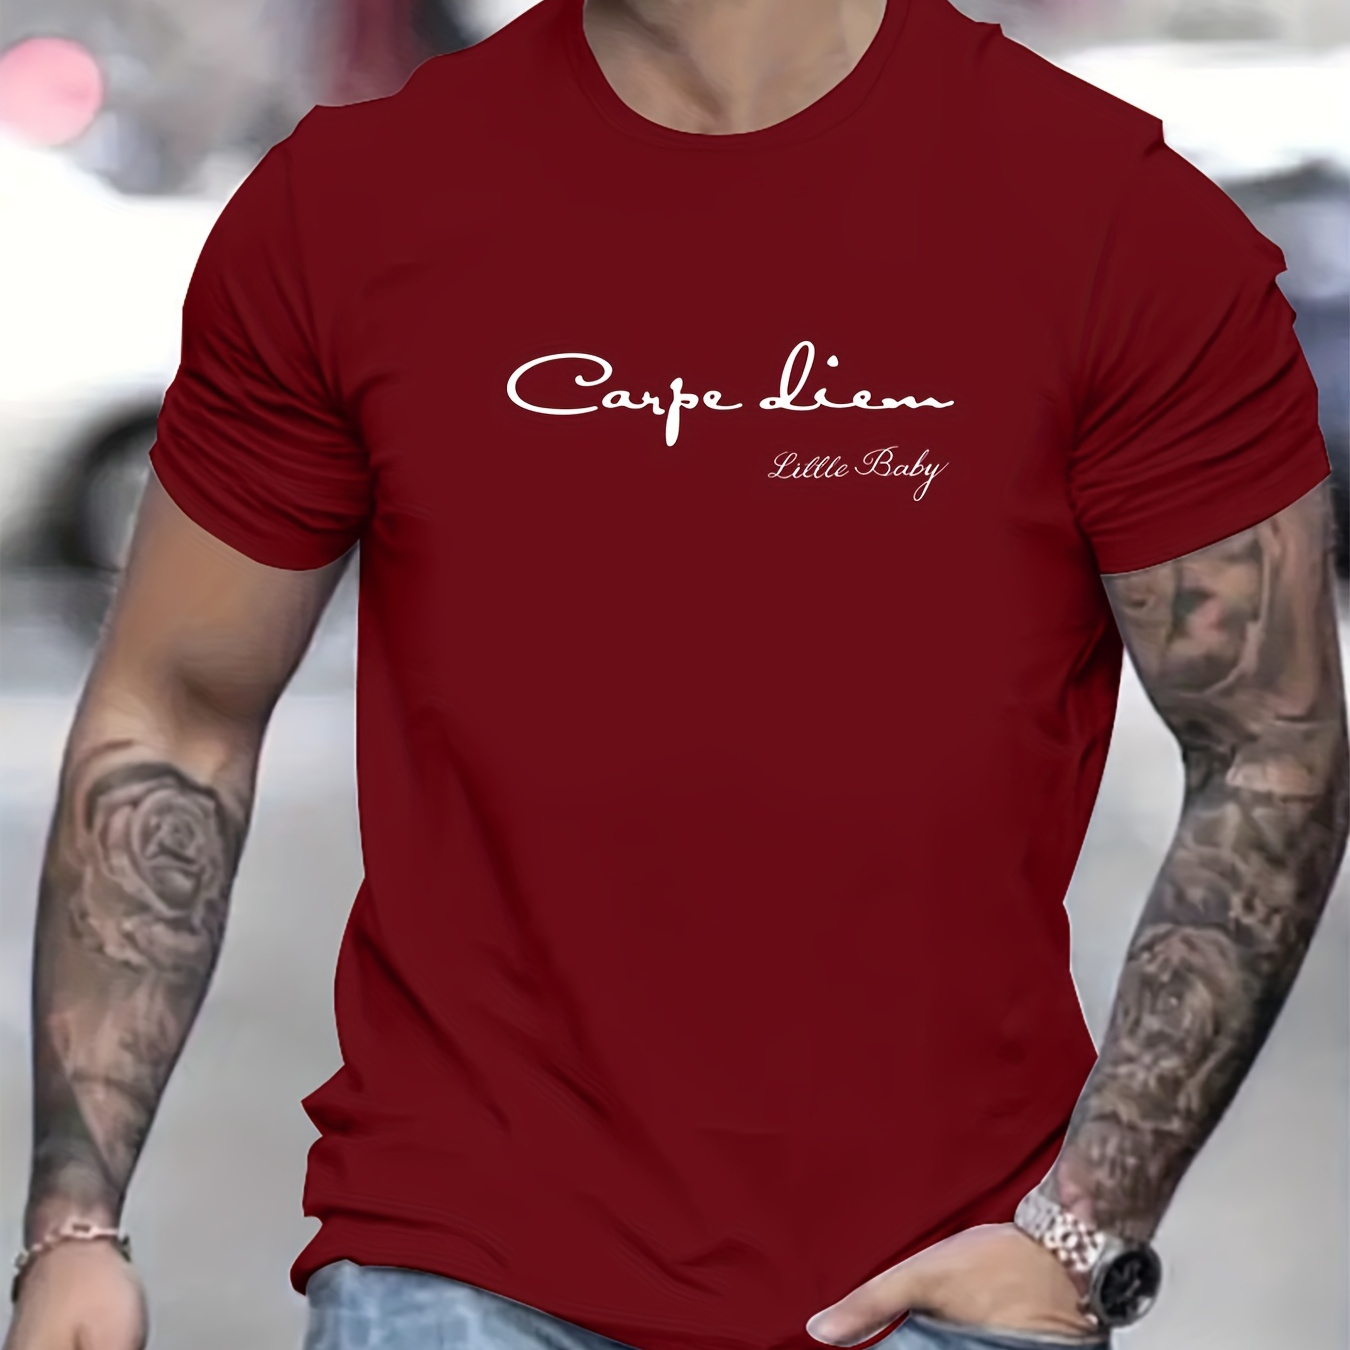 

carpe Diem" Pattern Print Men's Comfy Chic T-shirt, Graphic Tee Men's Summer Outdoor Clothes, Men's Clothing, Tops For Men, Gift For Men